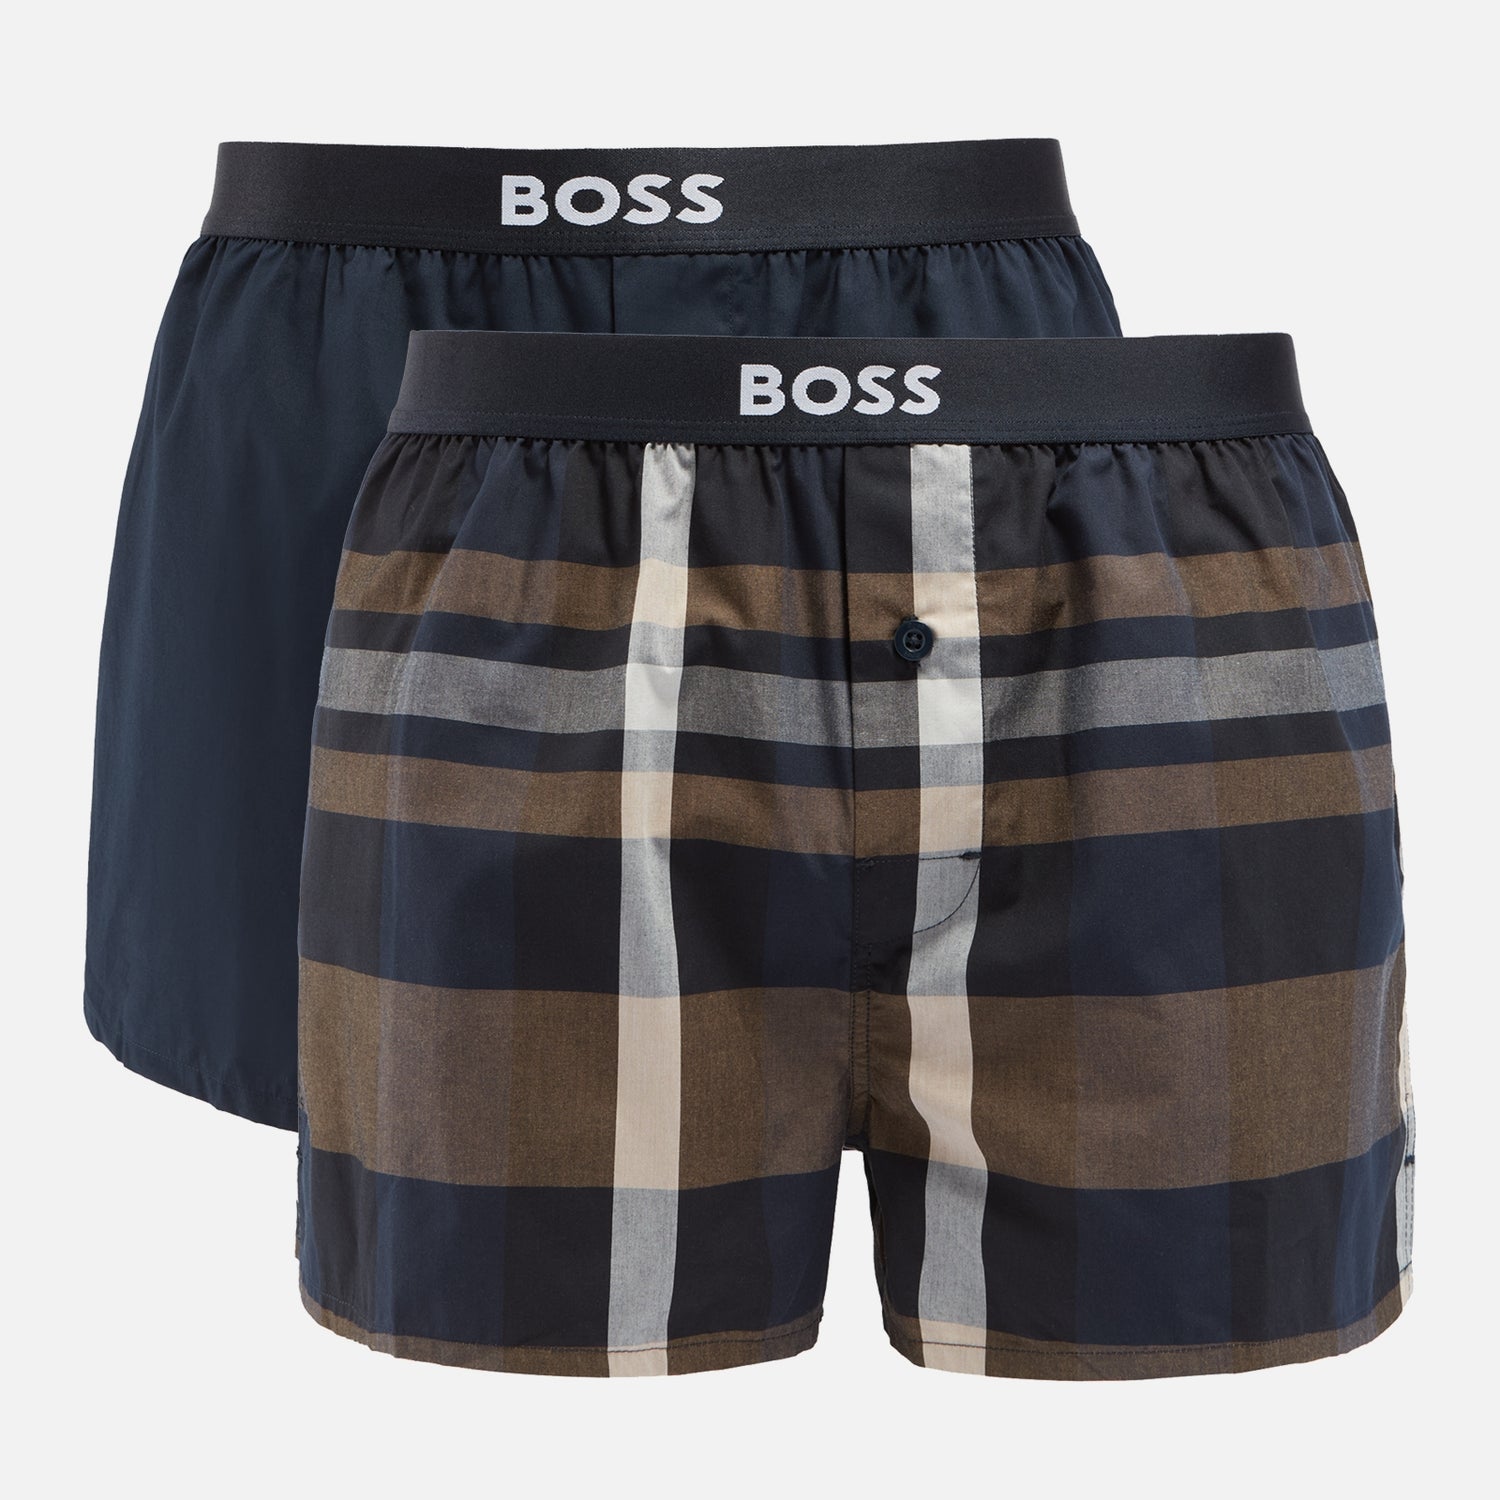 BOSS Bodywear Cotton 2-Pack Boxer Shorts - S